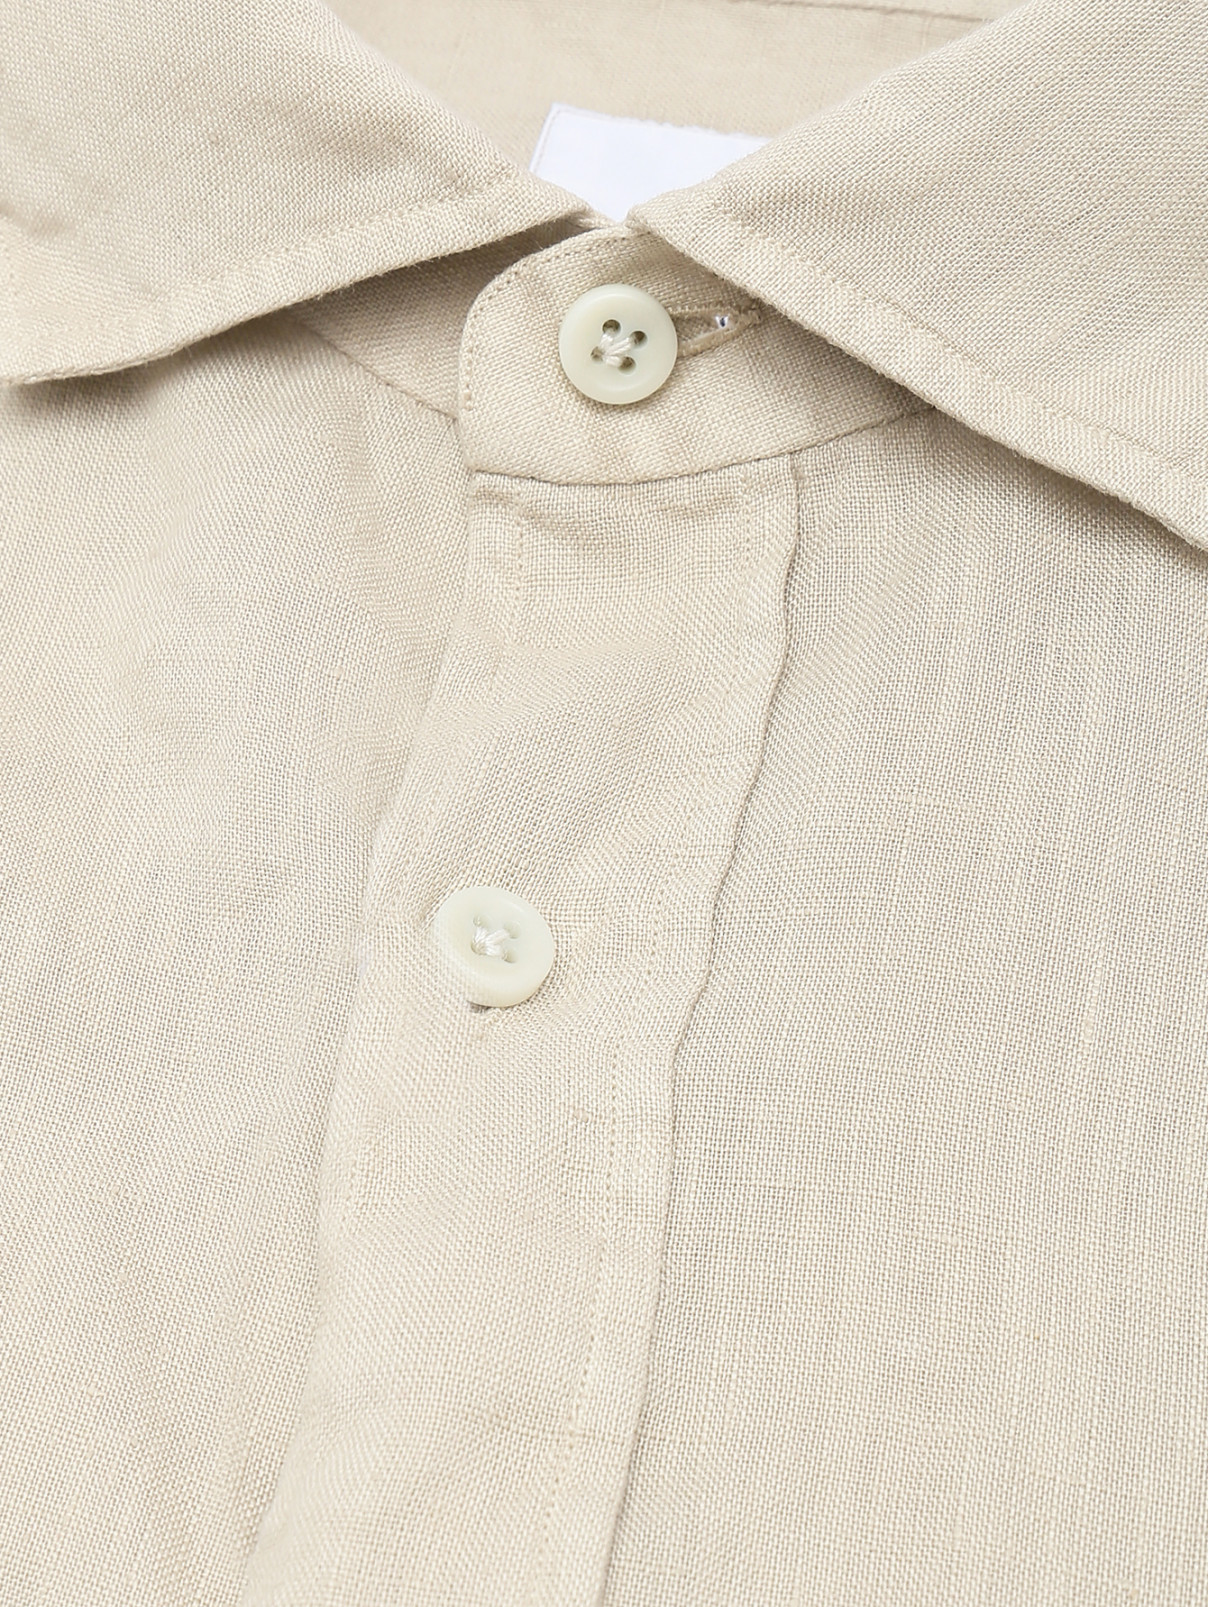 Рубашка изо льна с карманами Giampaolo  –  Деталь  – Цвет:  Бежевый